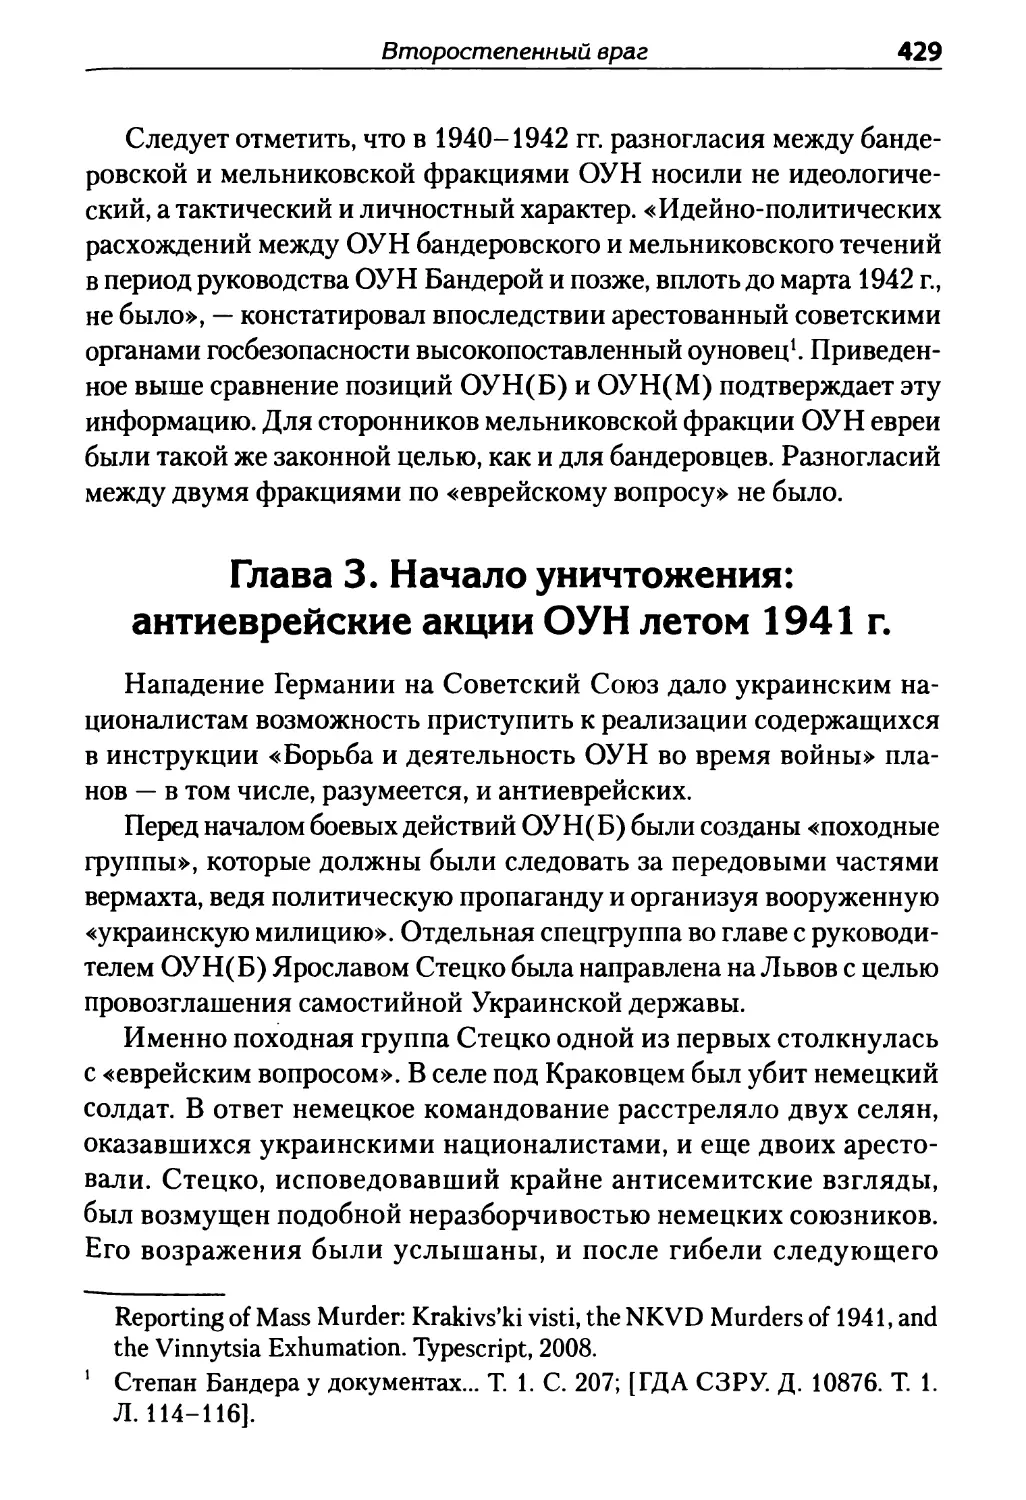 Глава 3. Начало уничтожения: антиеврейские акции ОУН летом 1941 г